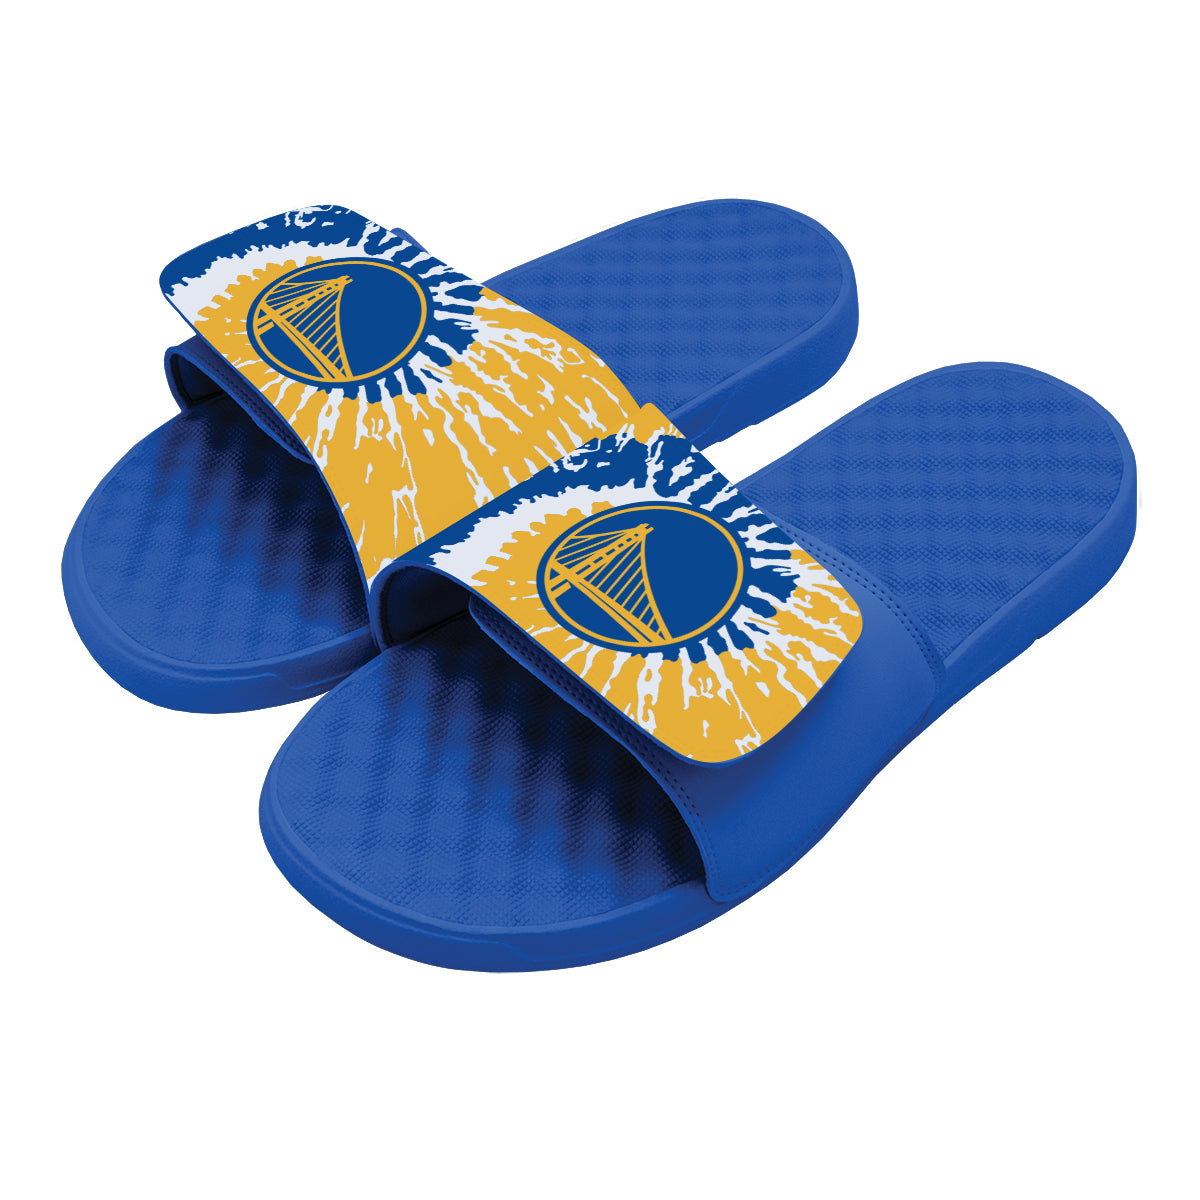 Golden State Warriors Slides